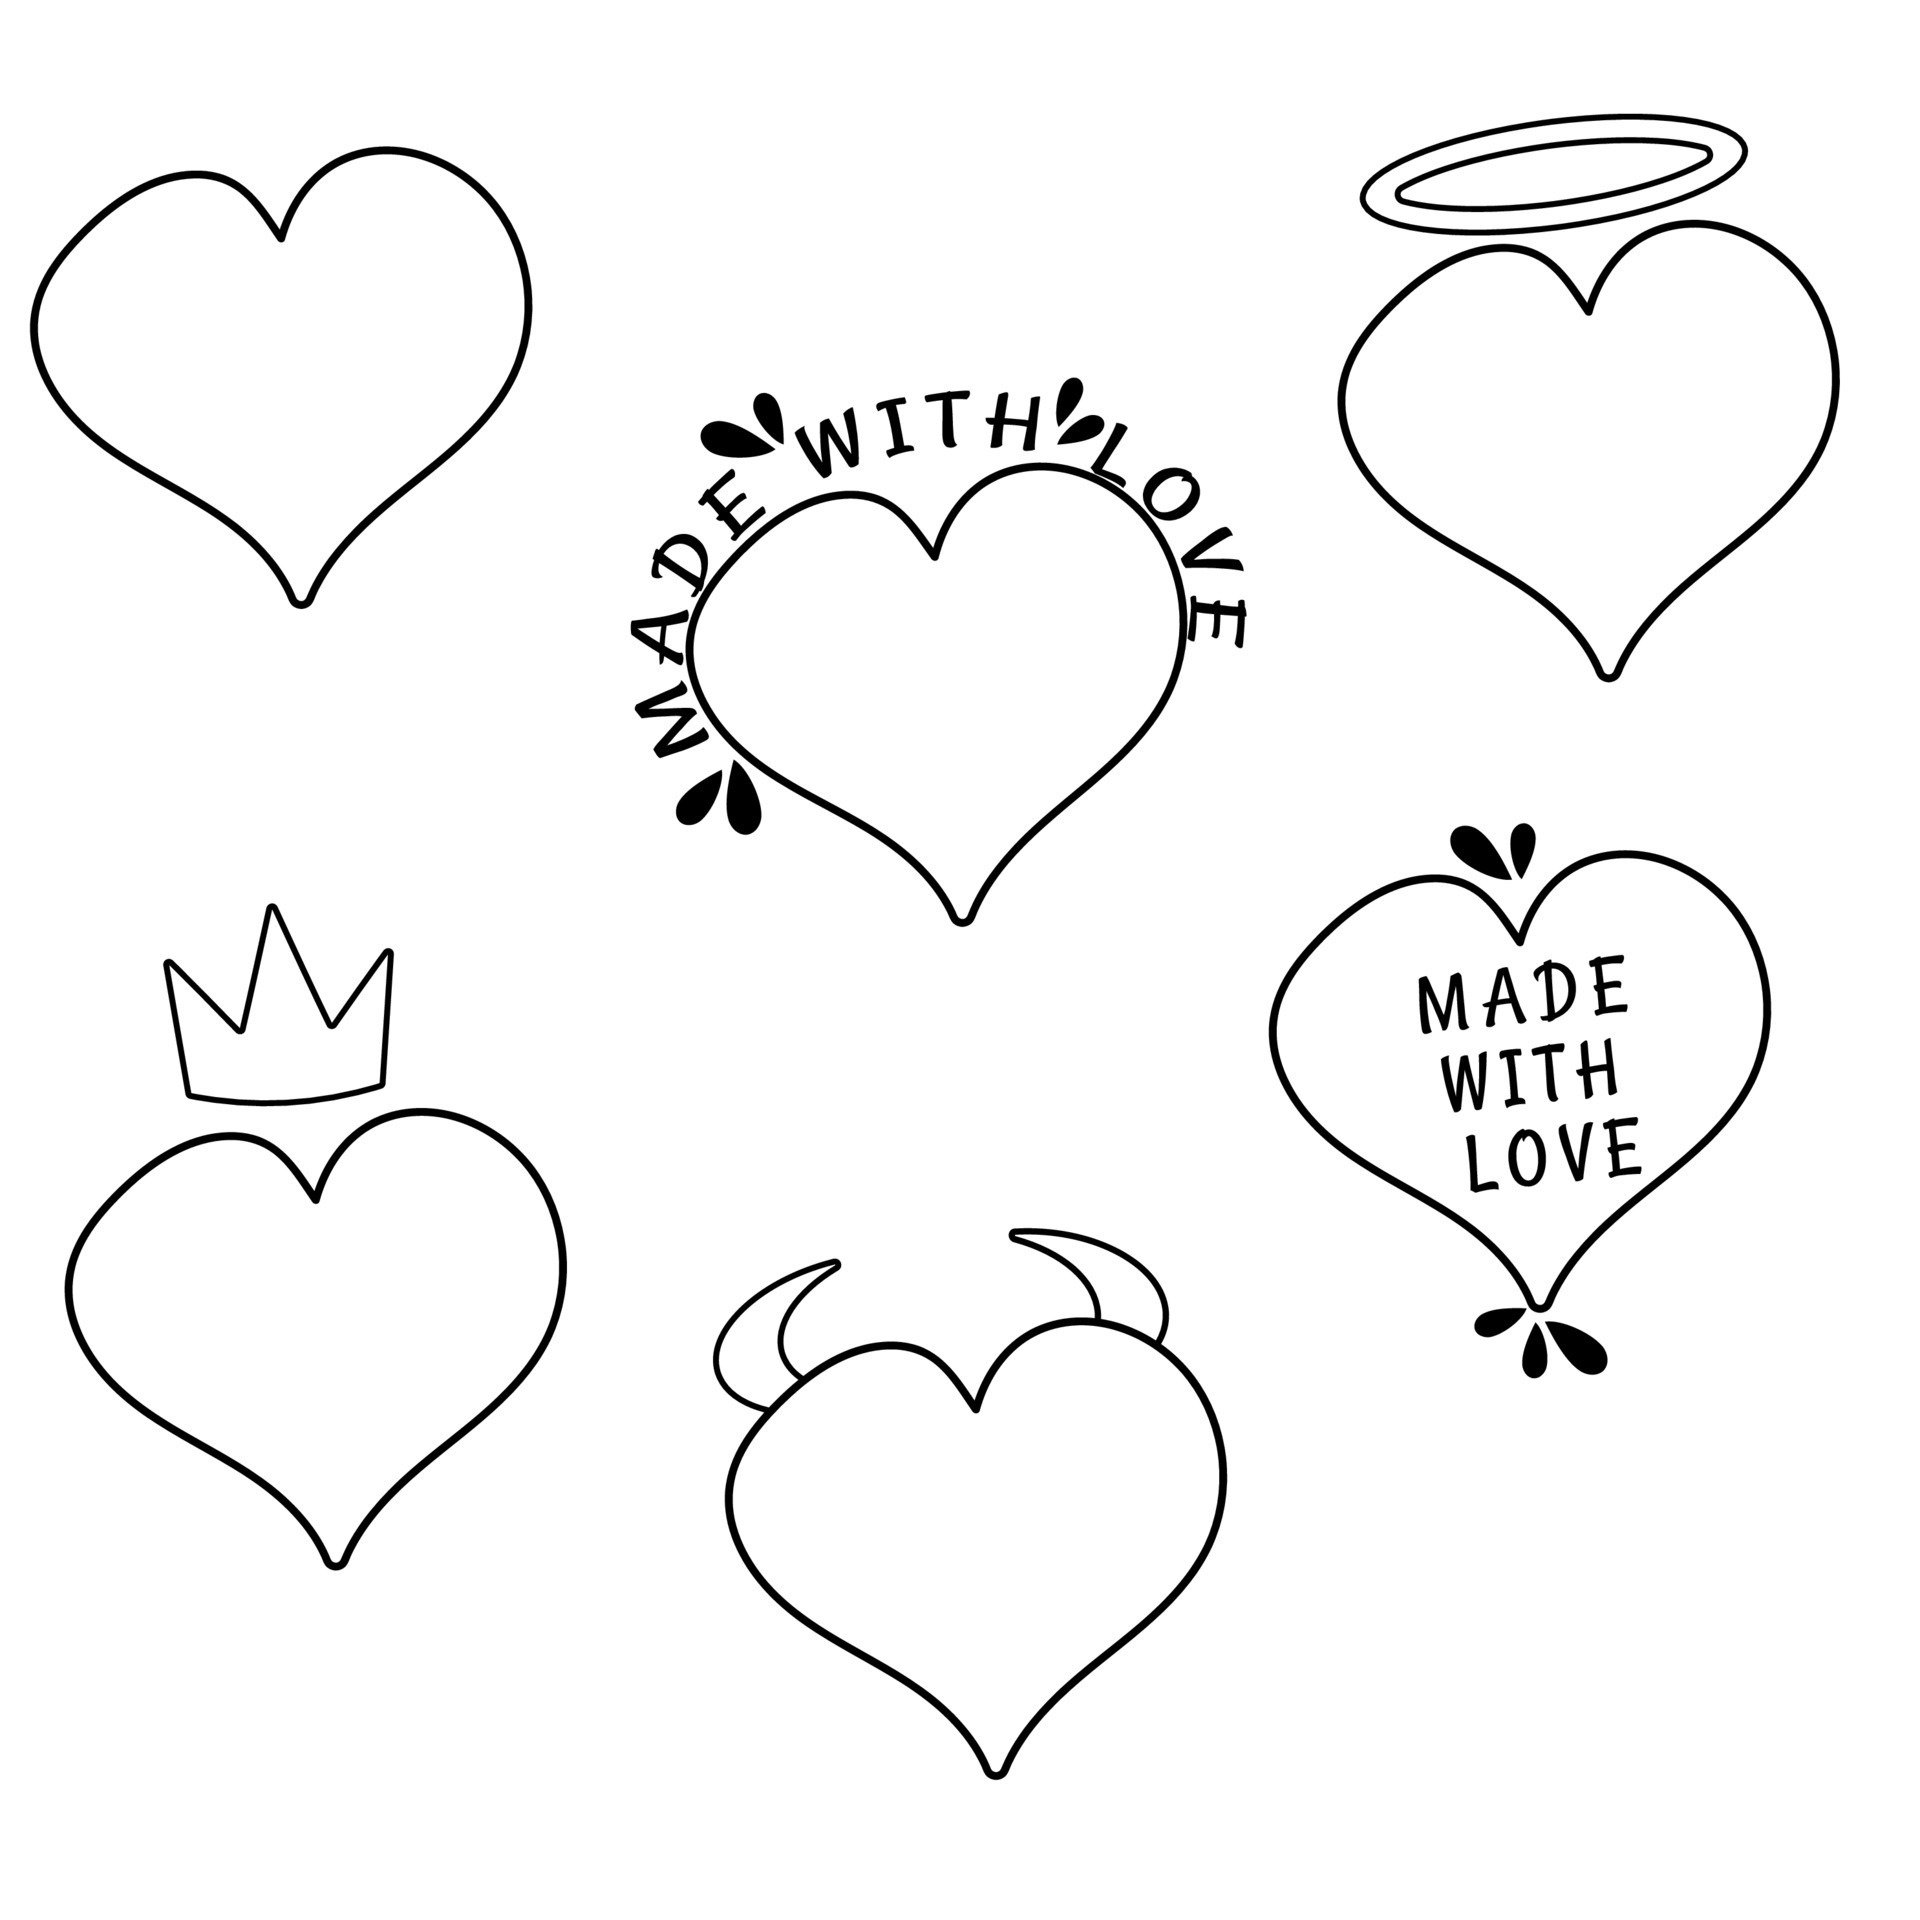 Love Heart Stencil